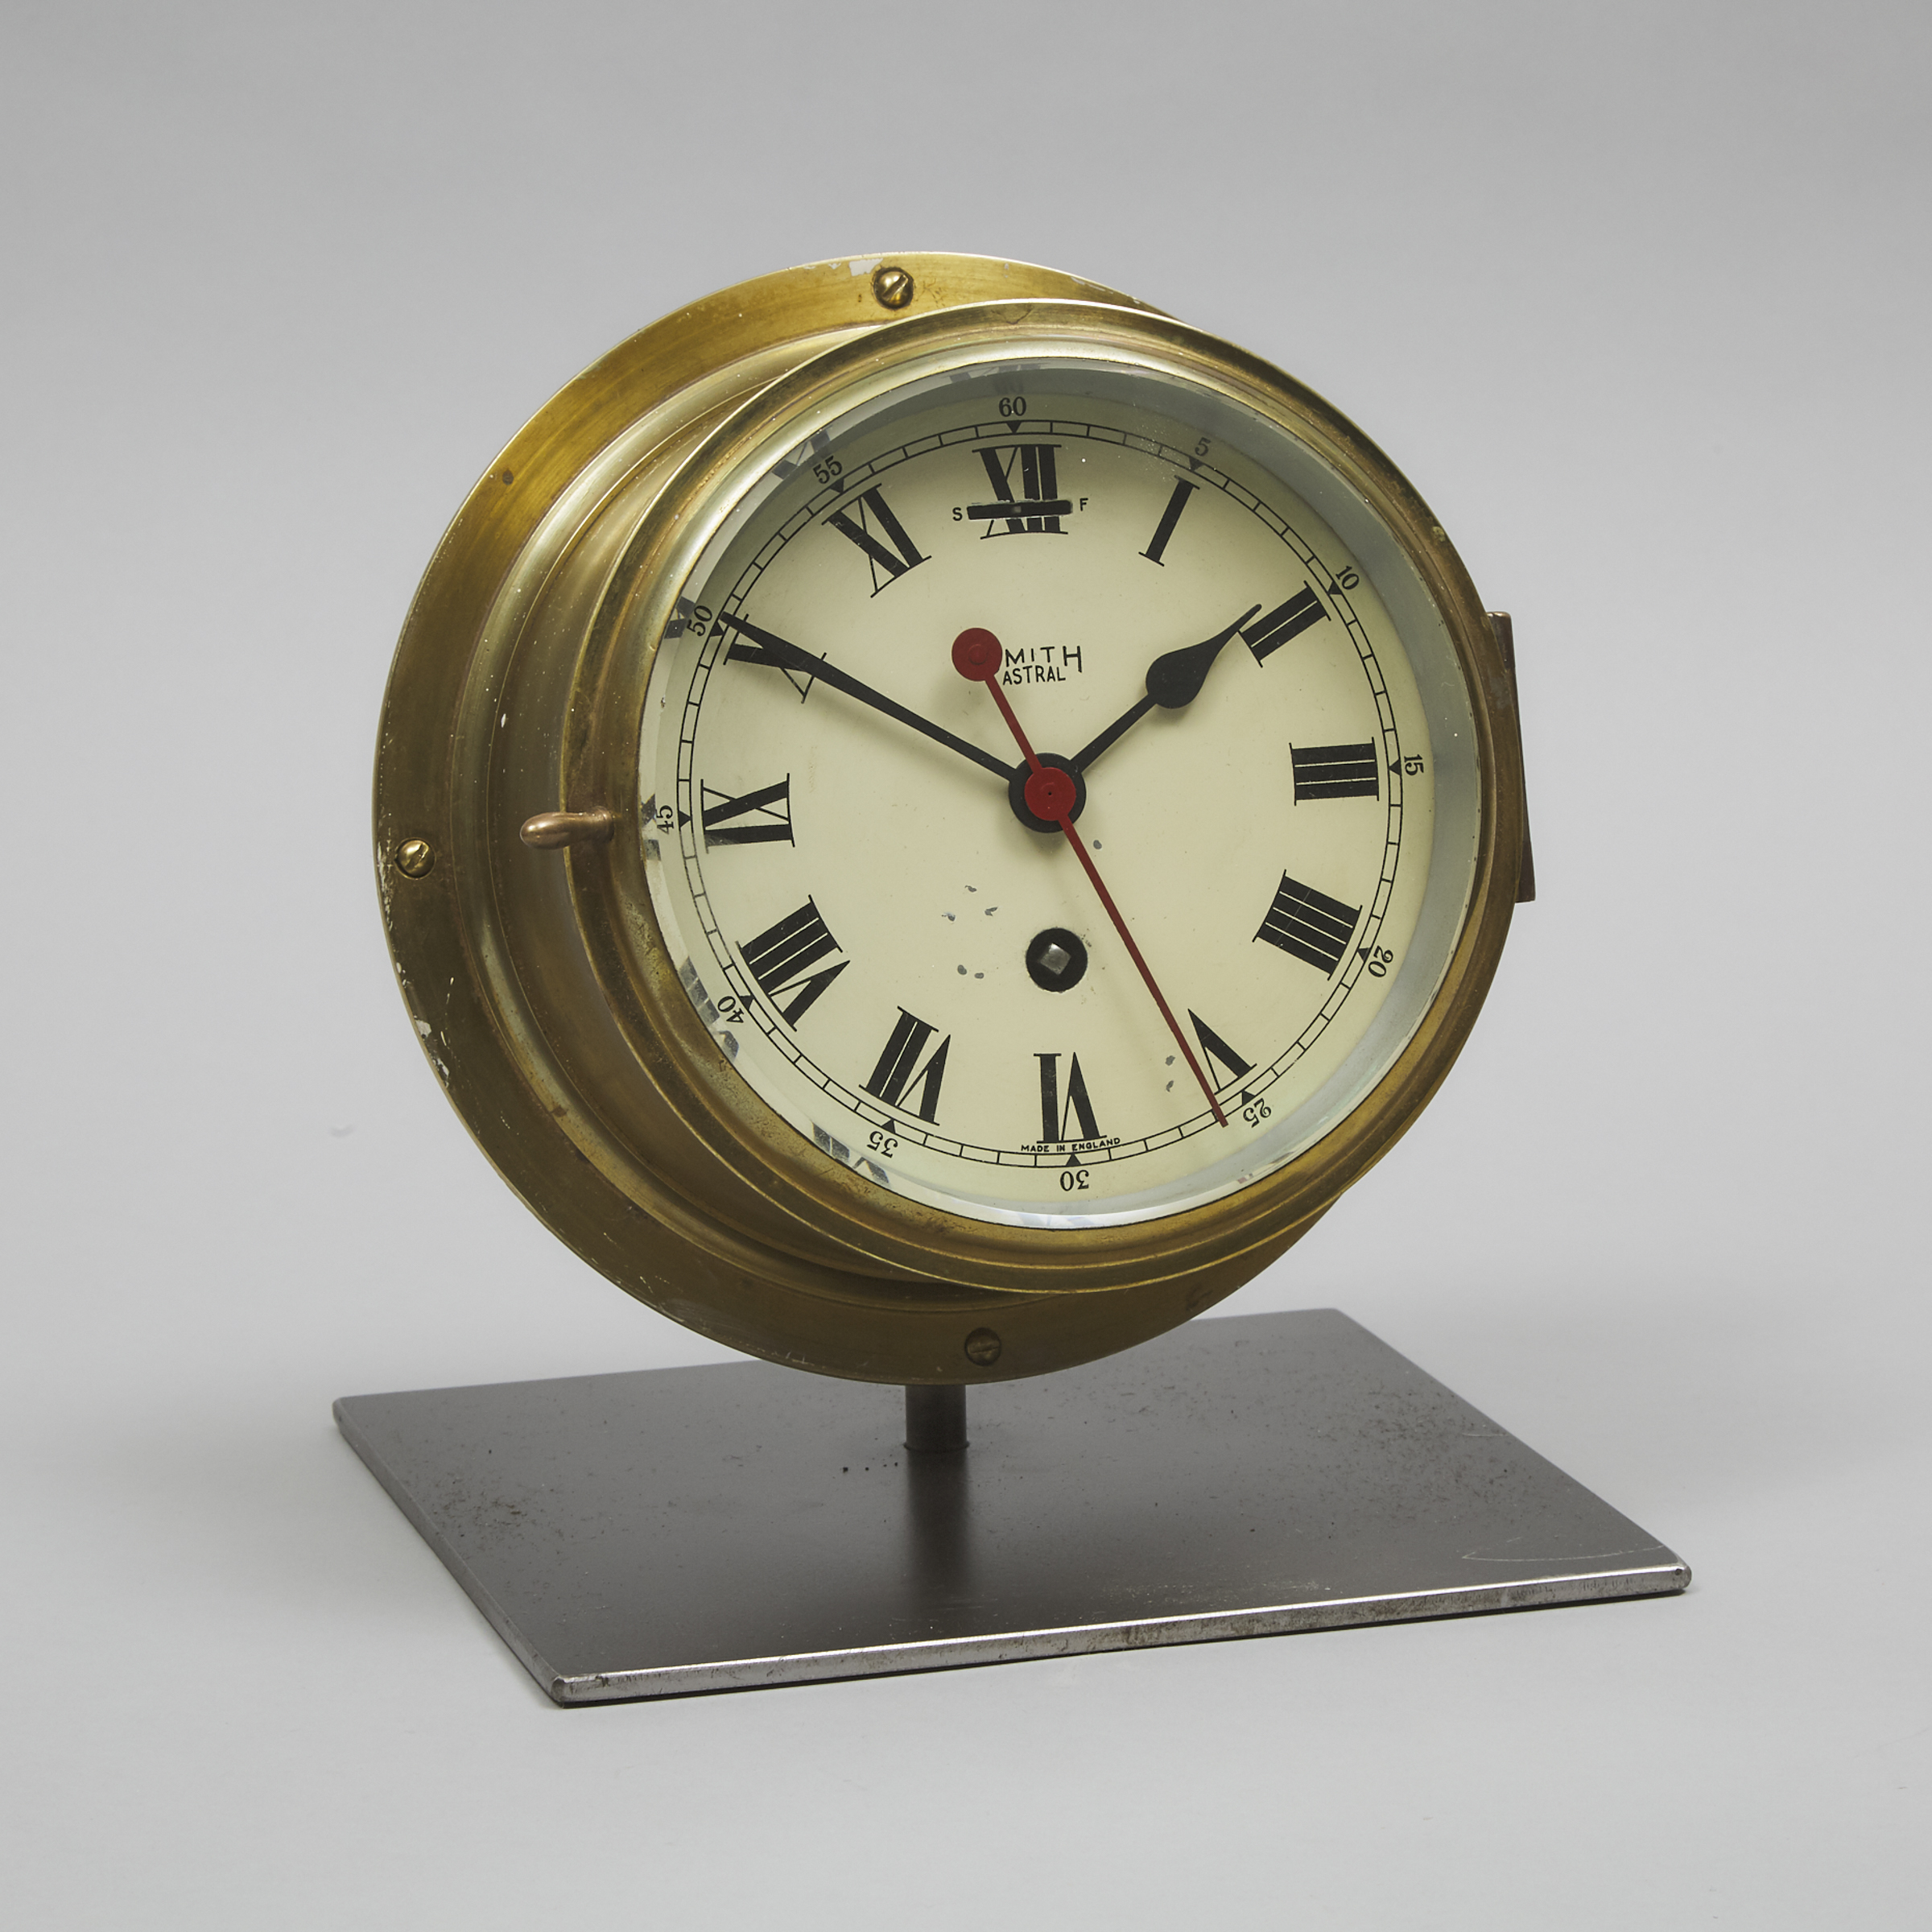 Smith 'Astral' Brass Marine Chronometer, mid 20th century